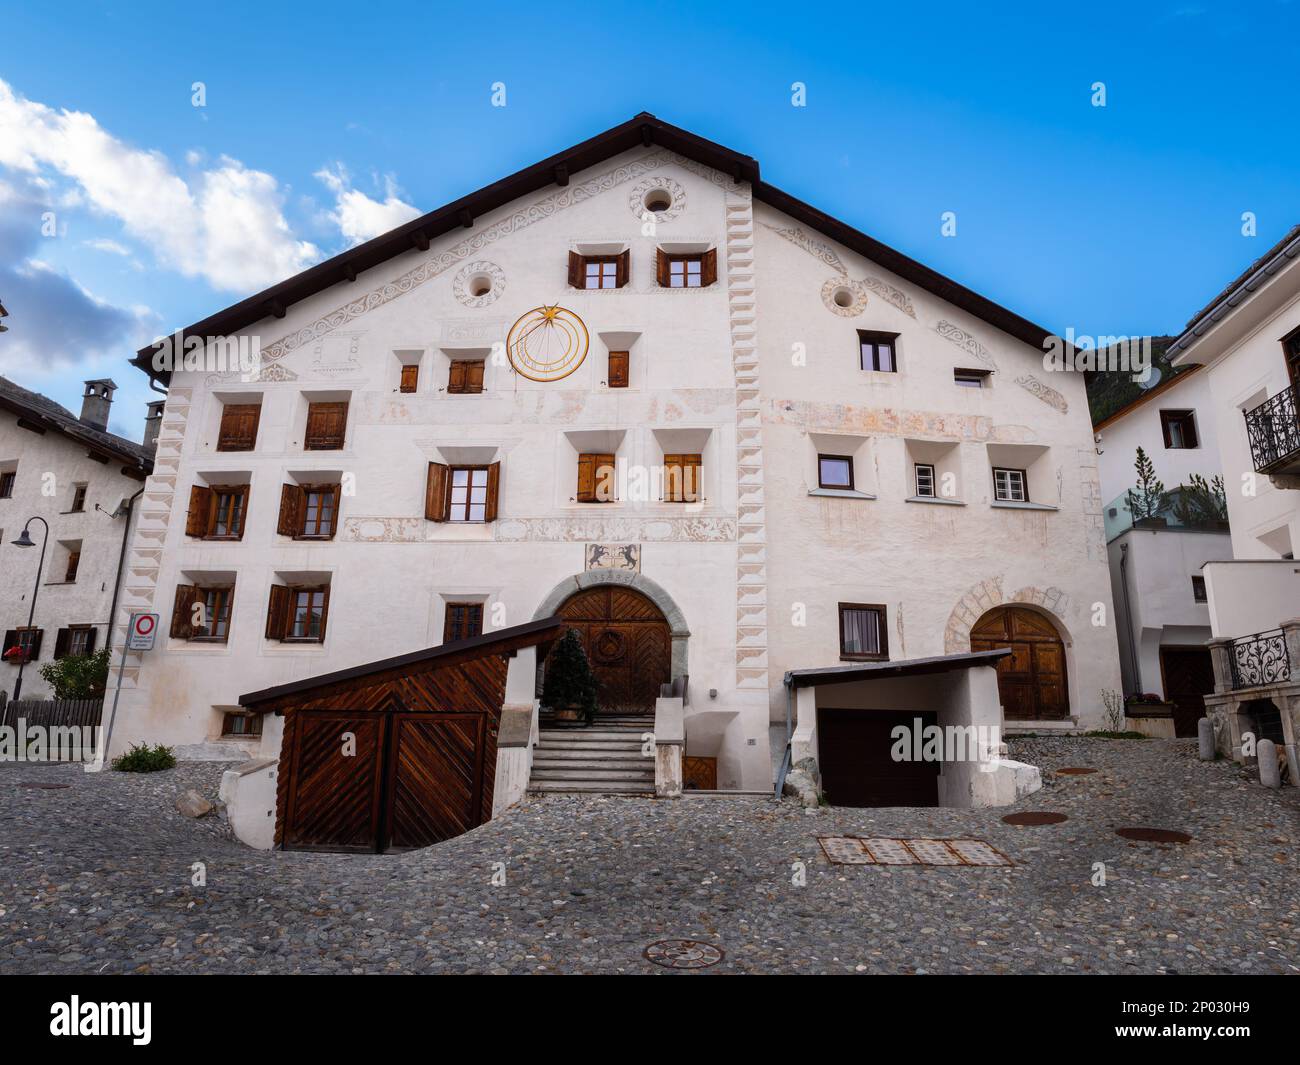 La Punt, Switzerland - September 29, 2021: Big traditional swiss house at La Punt in Engadine, canton Graubunden in Switzerland. Stock Photo